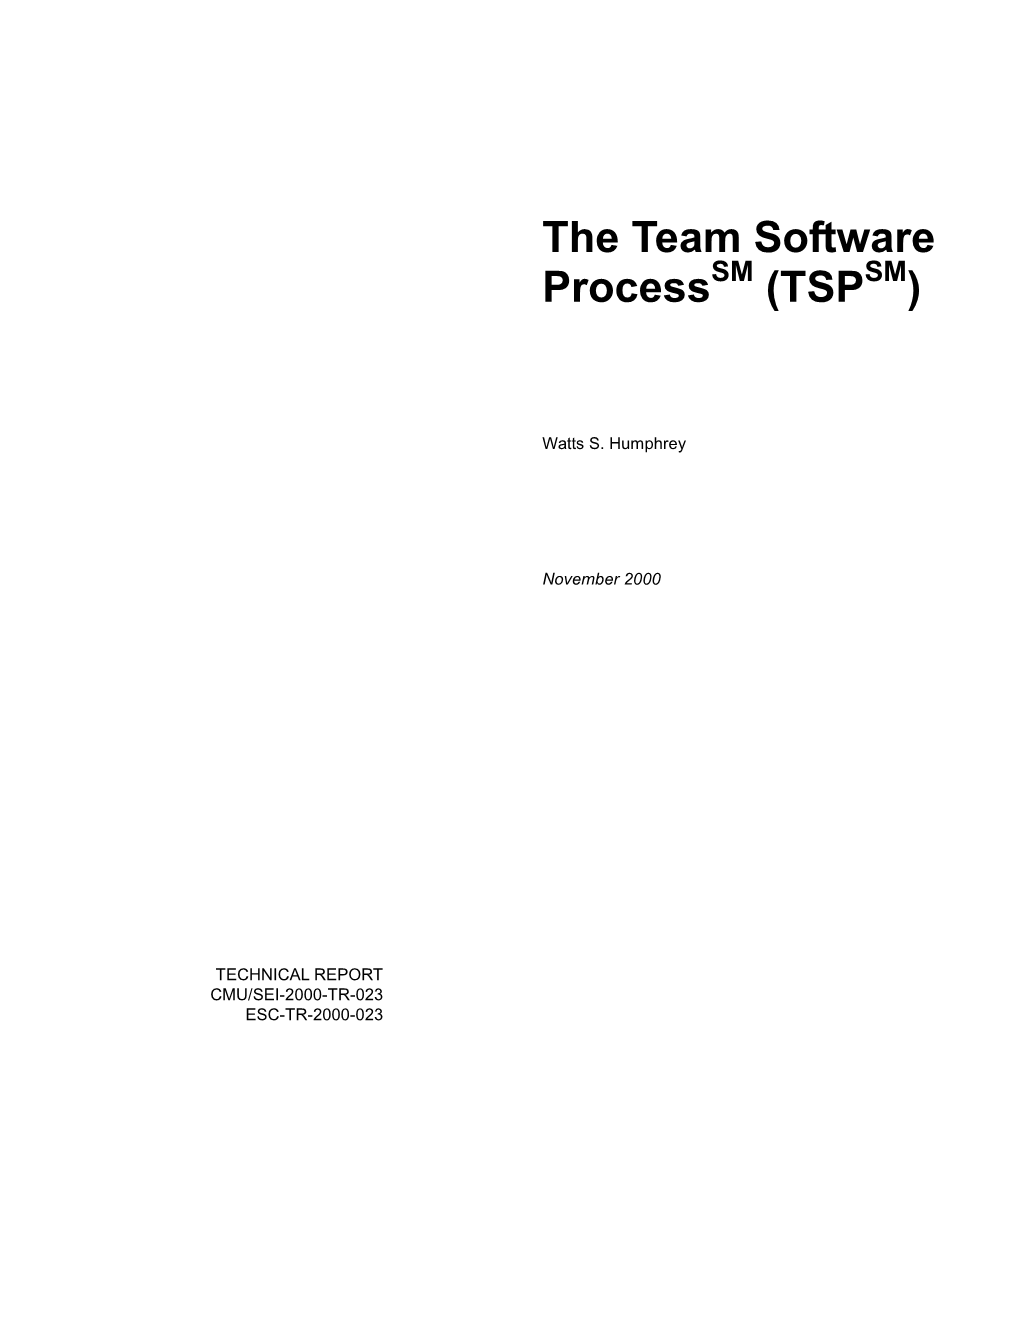 The Team Software Processsm (TSPSM)